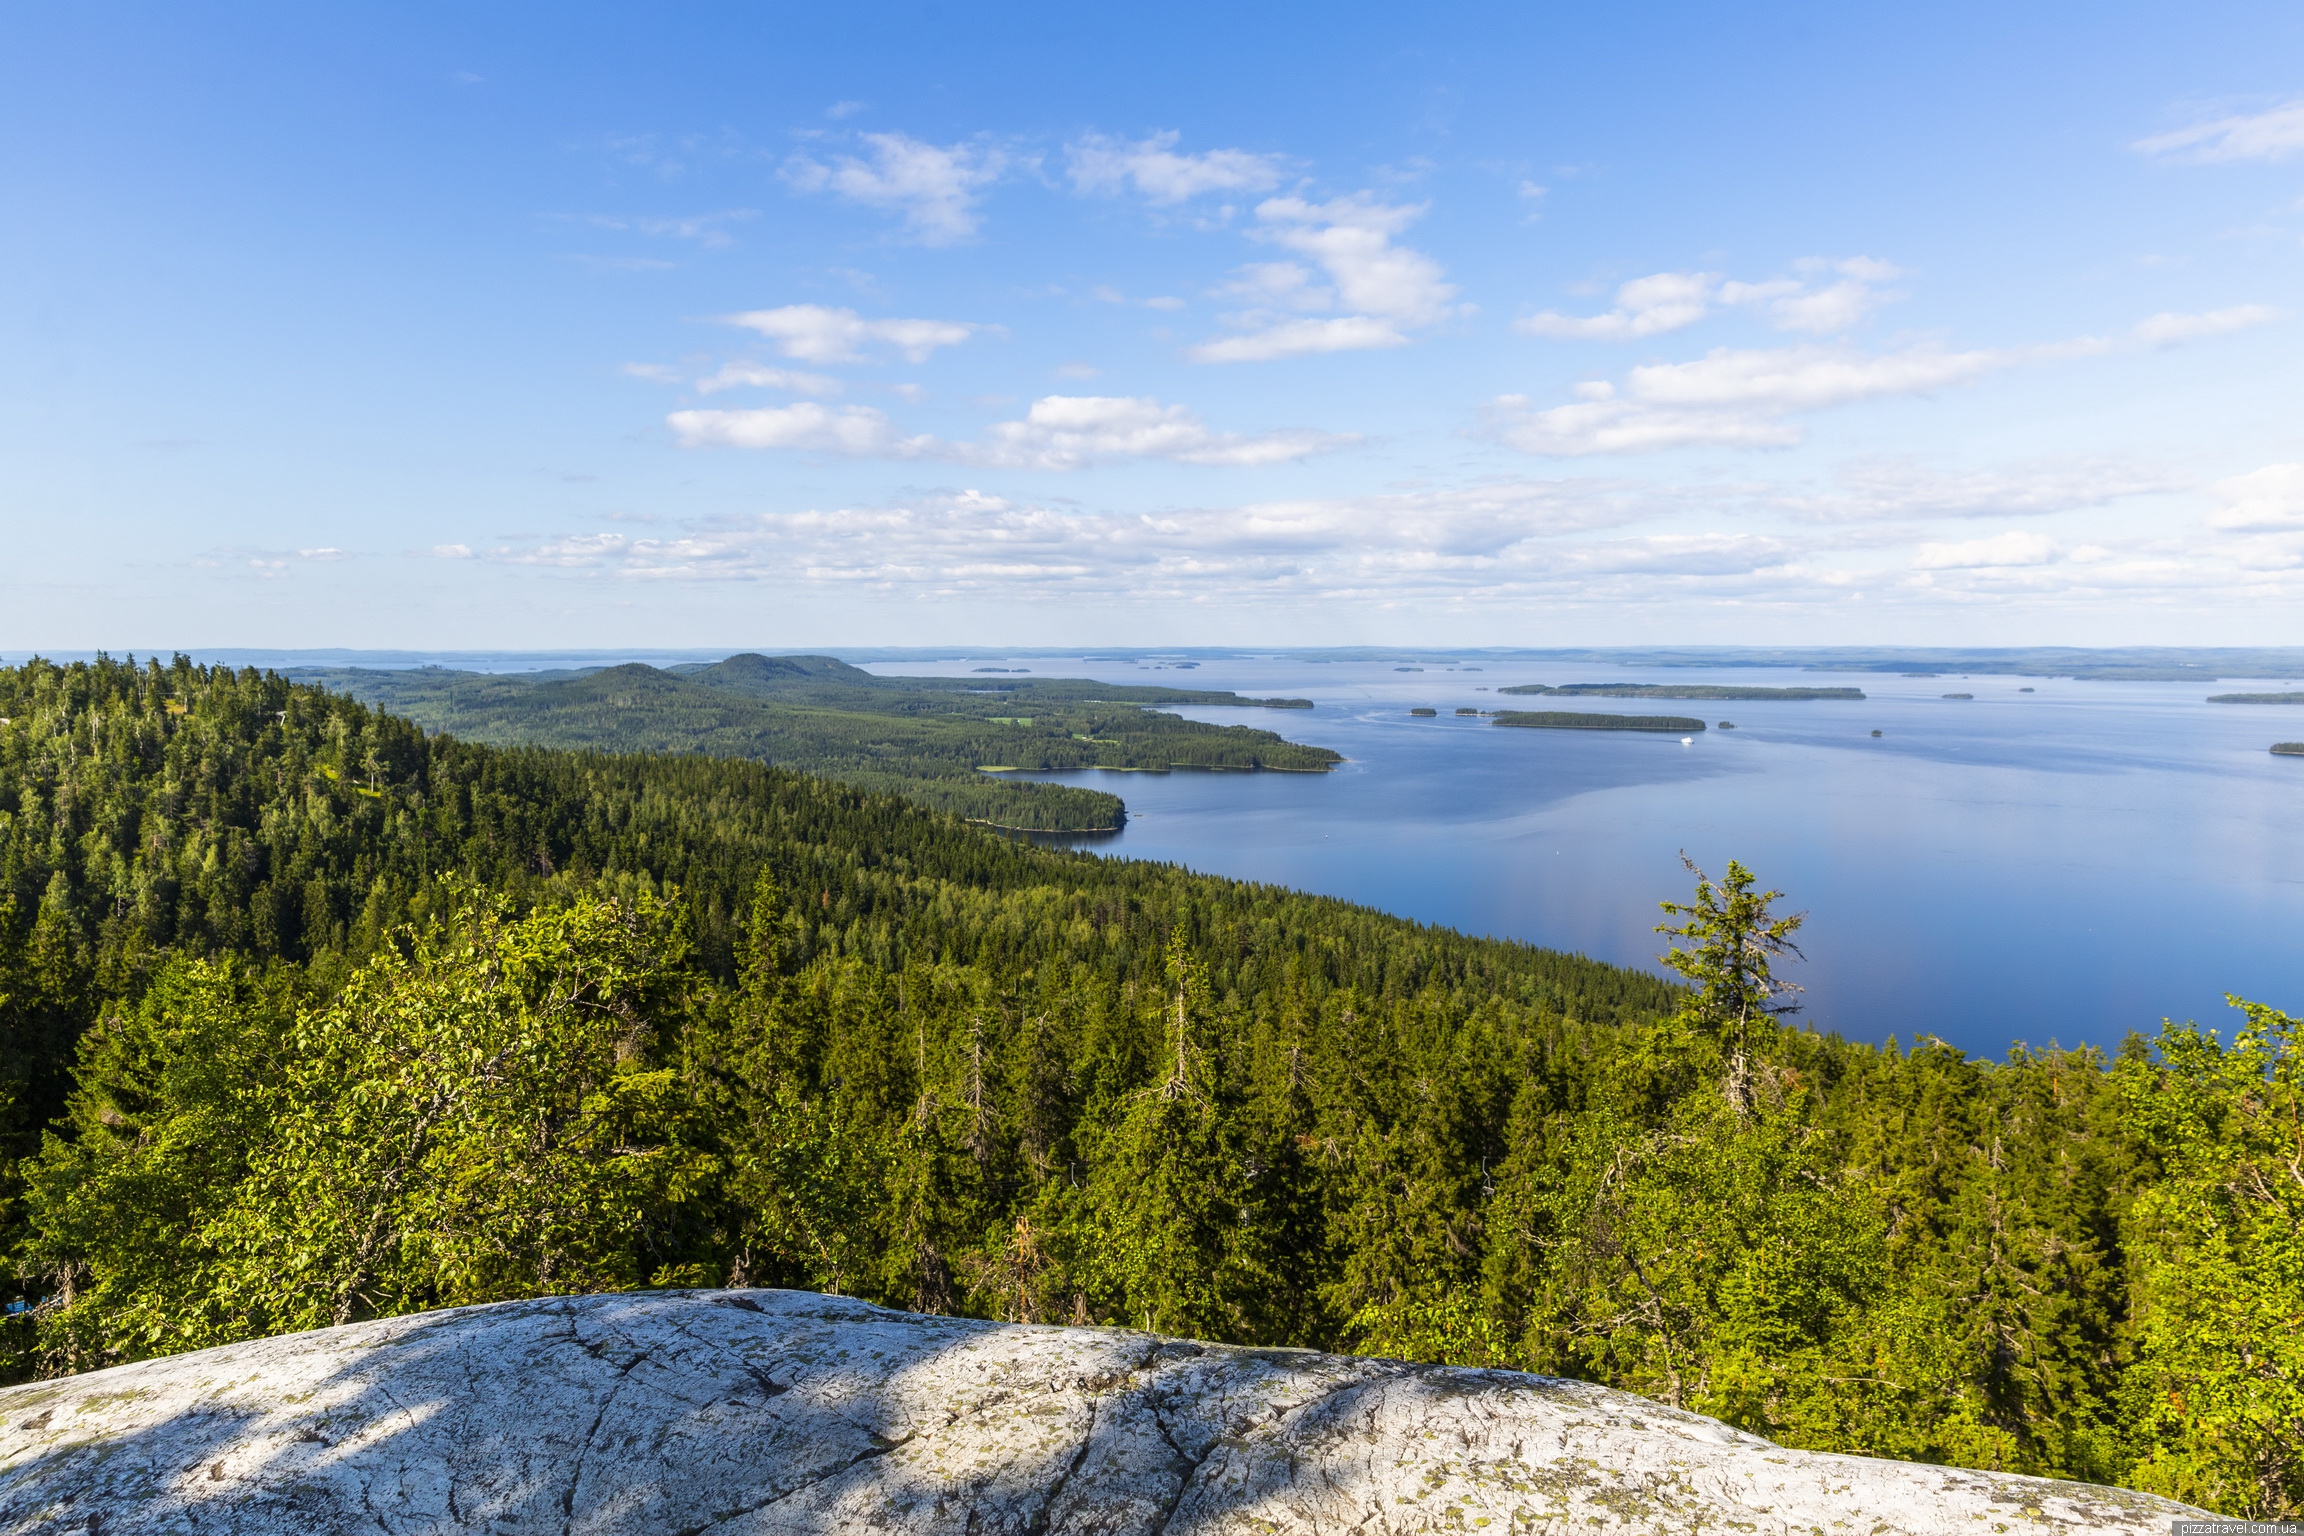 Koli National Park - Finland - Blog about interesting places